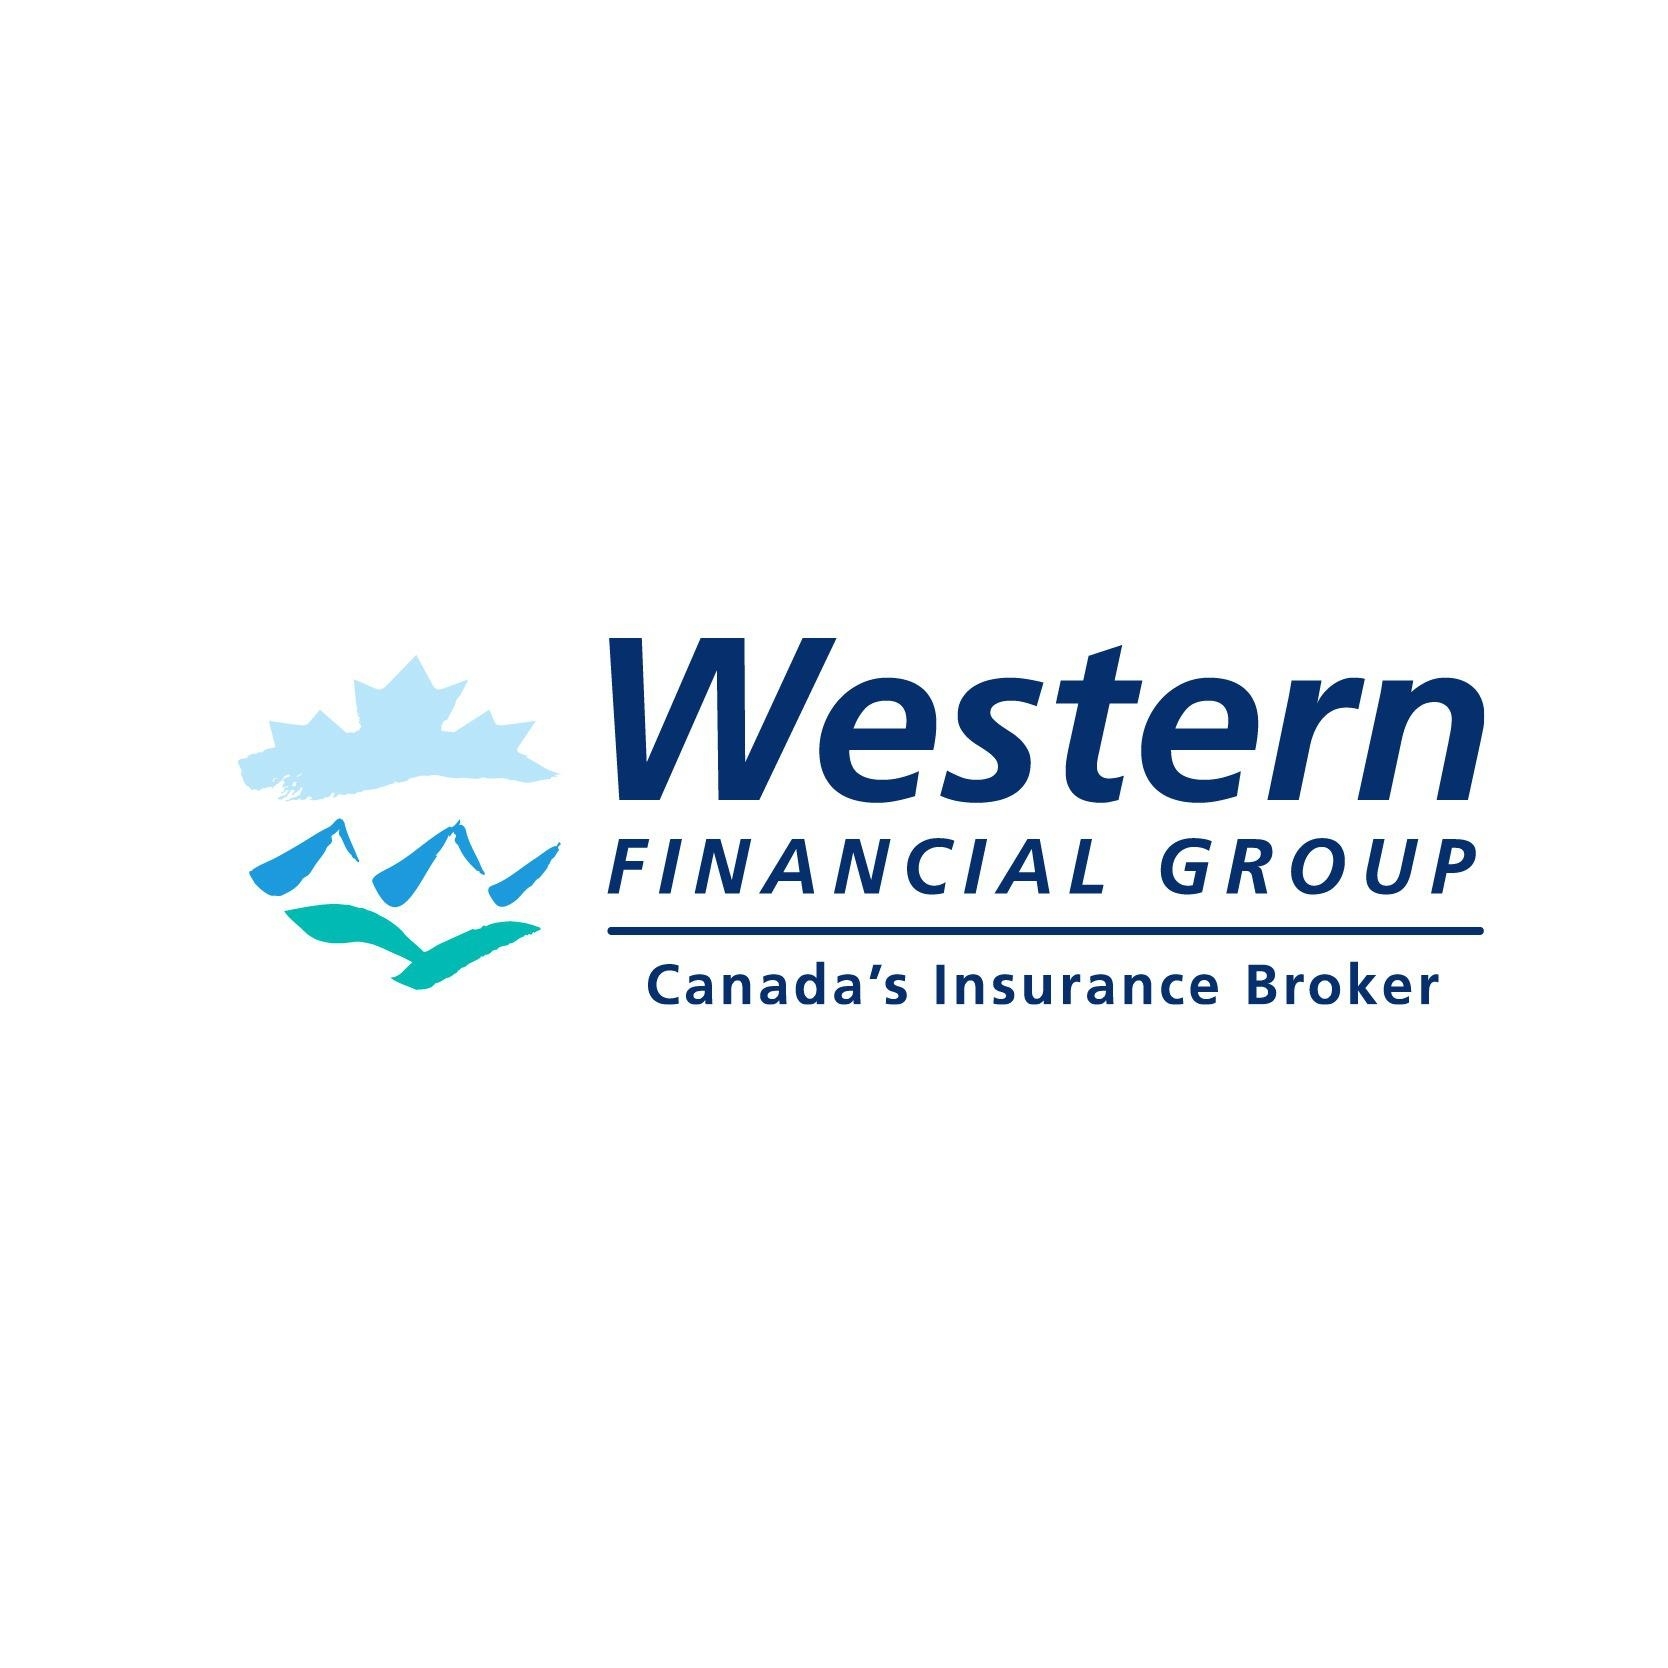 Western Financial Group Inc. - Canada's Insurance Broker - Assurance